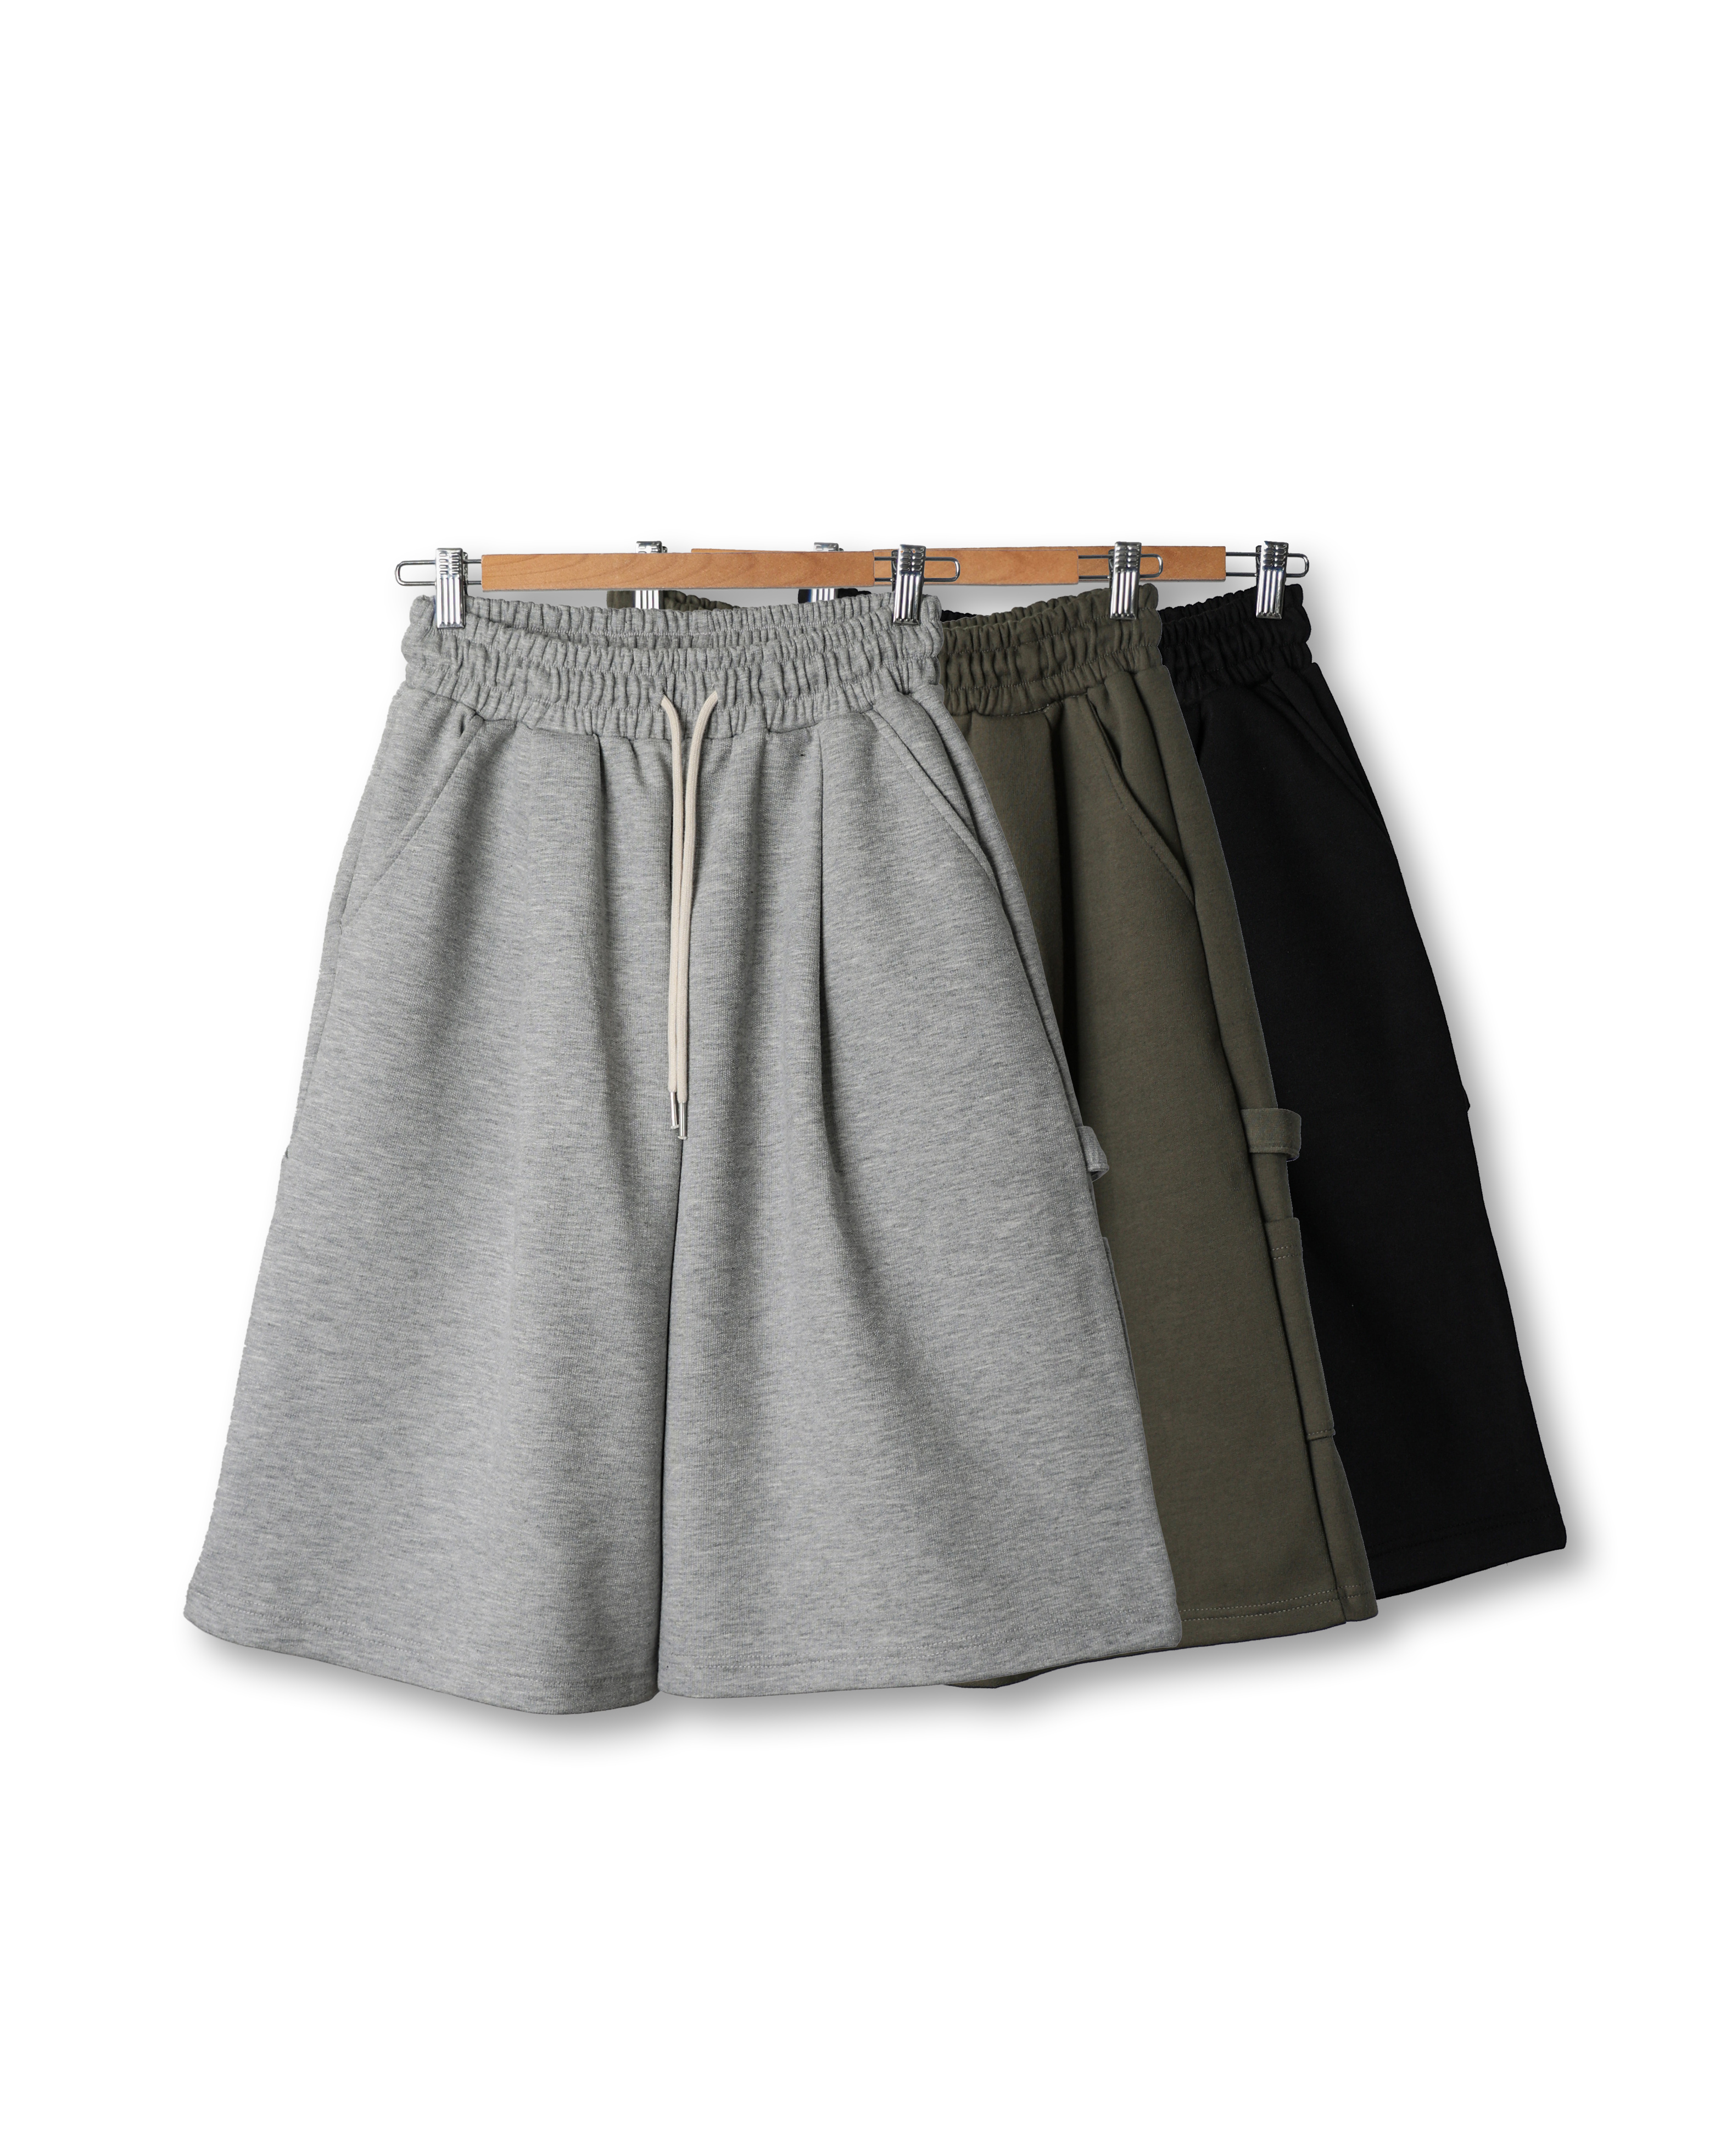 WMH Carpenter Work Sweat Half Pants (Black/Gray/Olive)